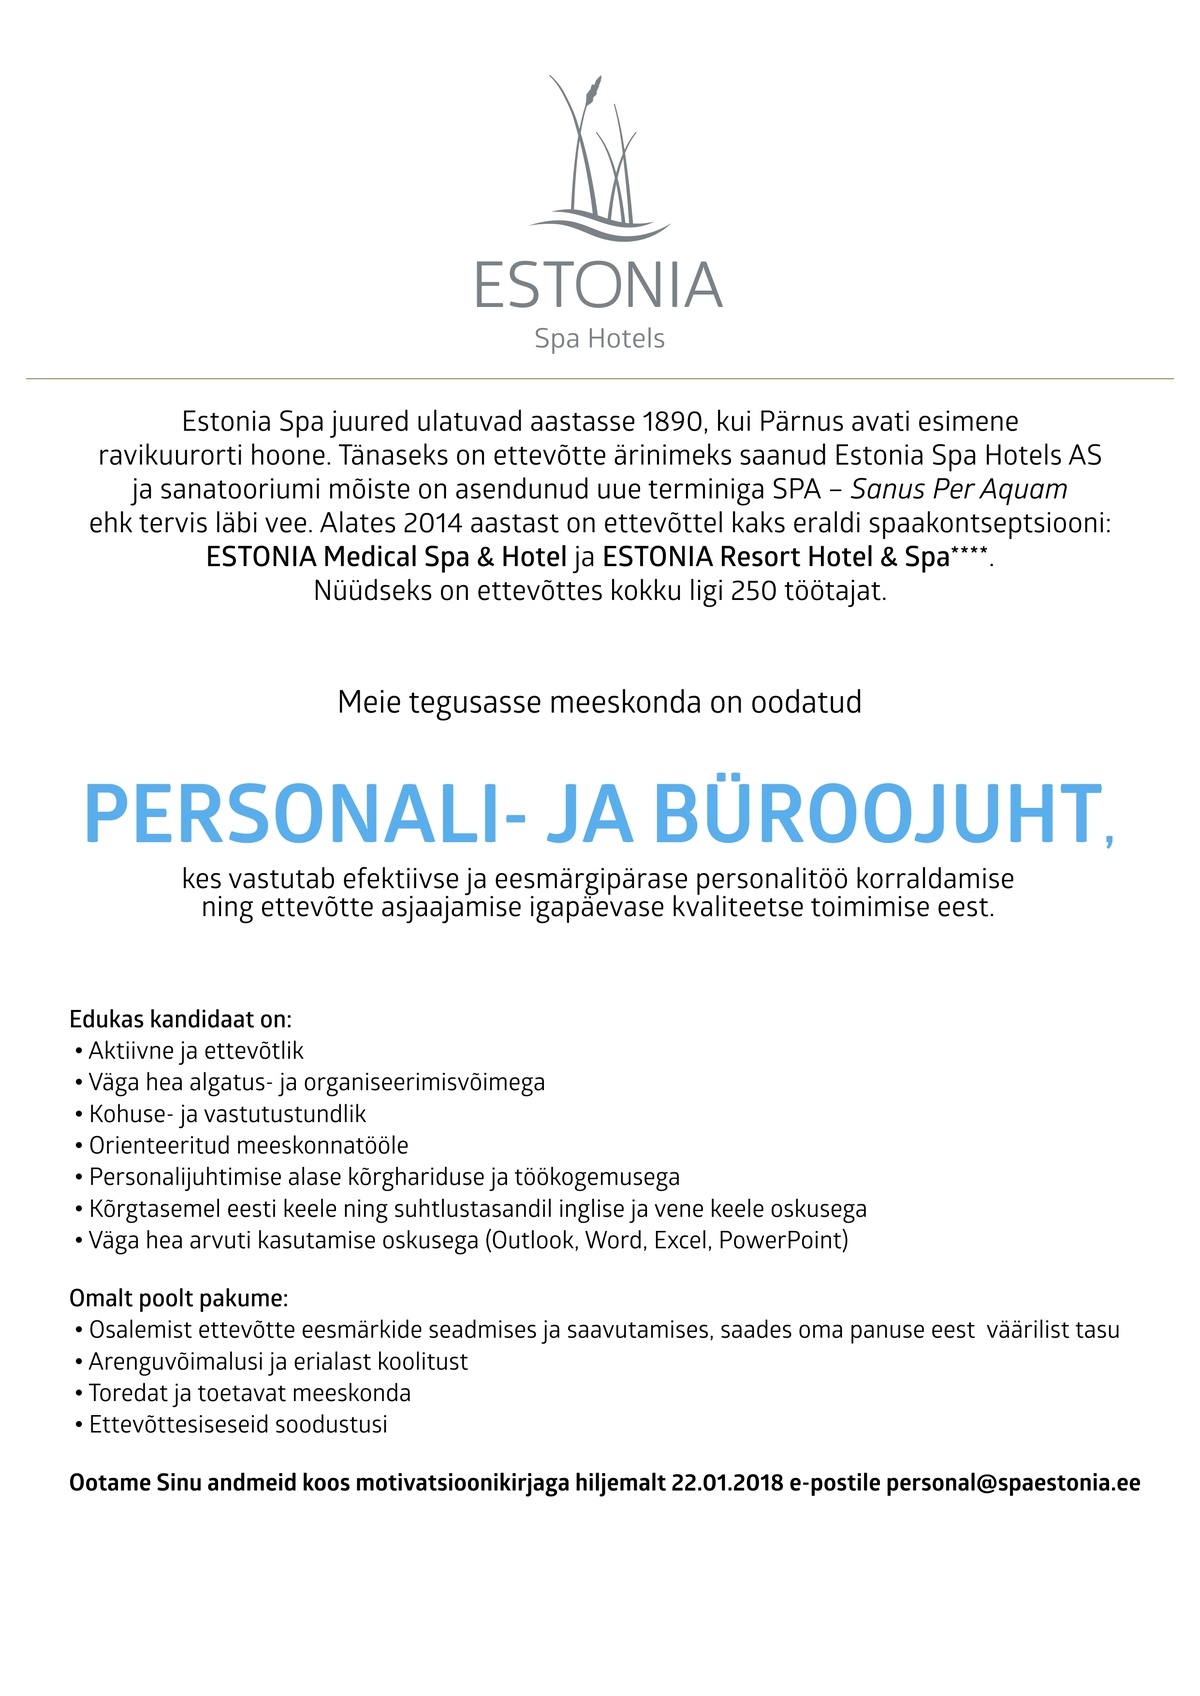 Estonia Spa Hotels AS PERSONALI- JA BÜROOJUHT